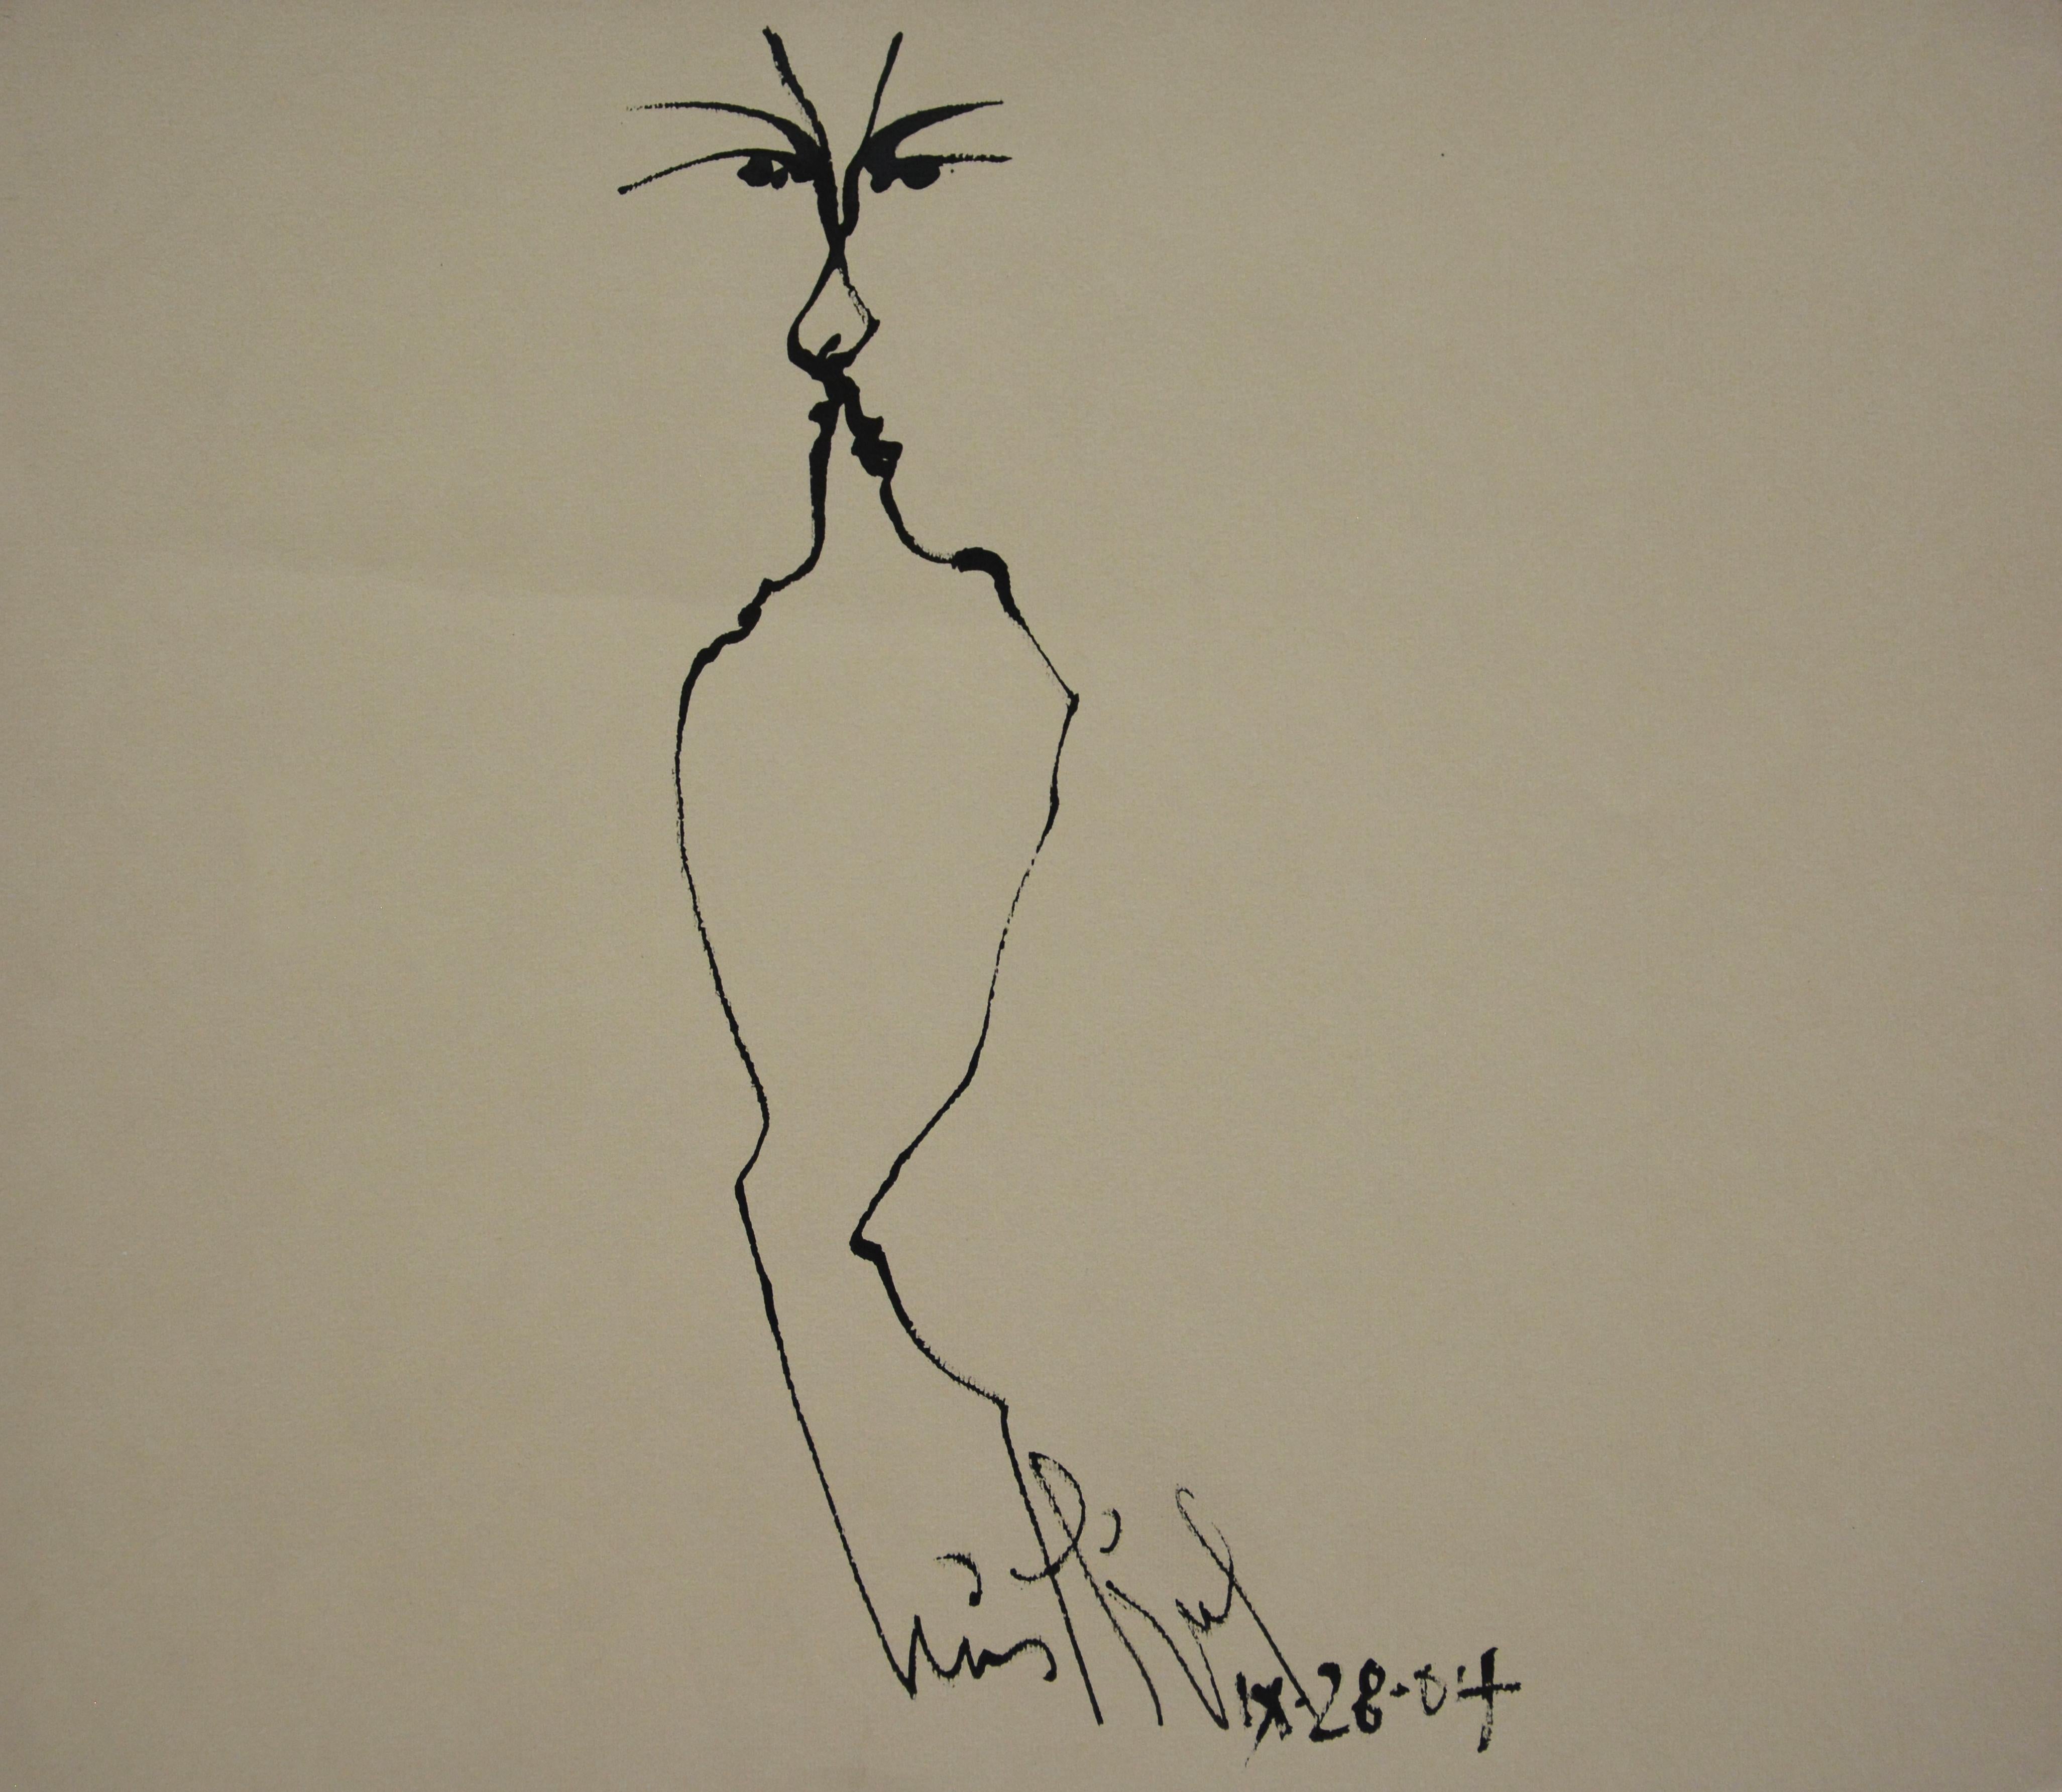 Luis Miguel Valdes  Figurative Art - Luis Miguel Valdes, ¨Linea con cara-3¨, 2004, Work on paper, 11.8x13.8 in